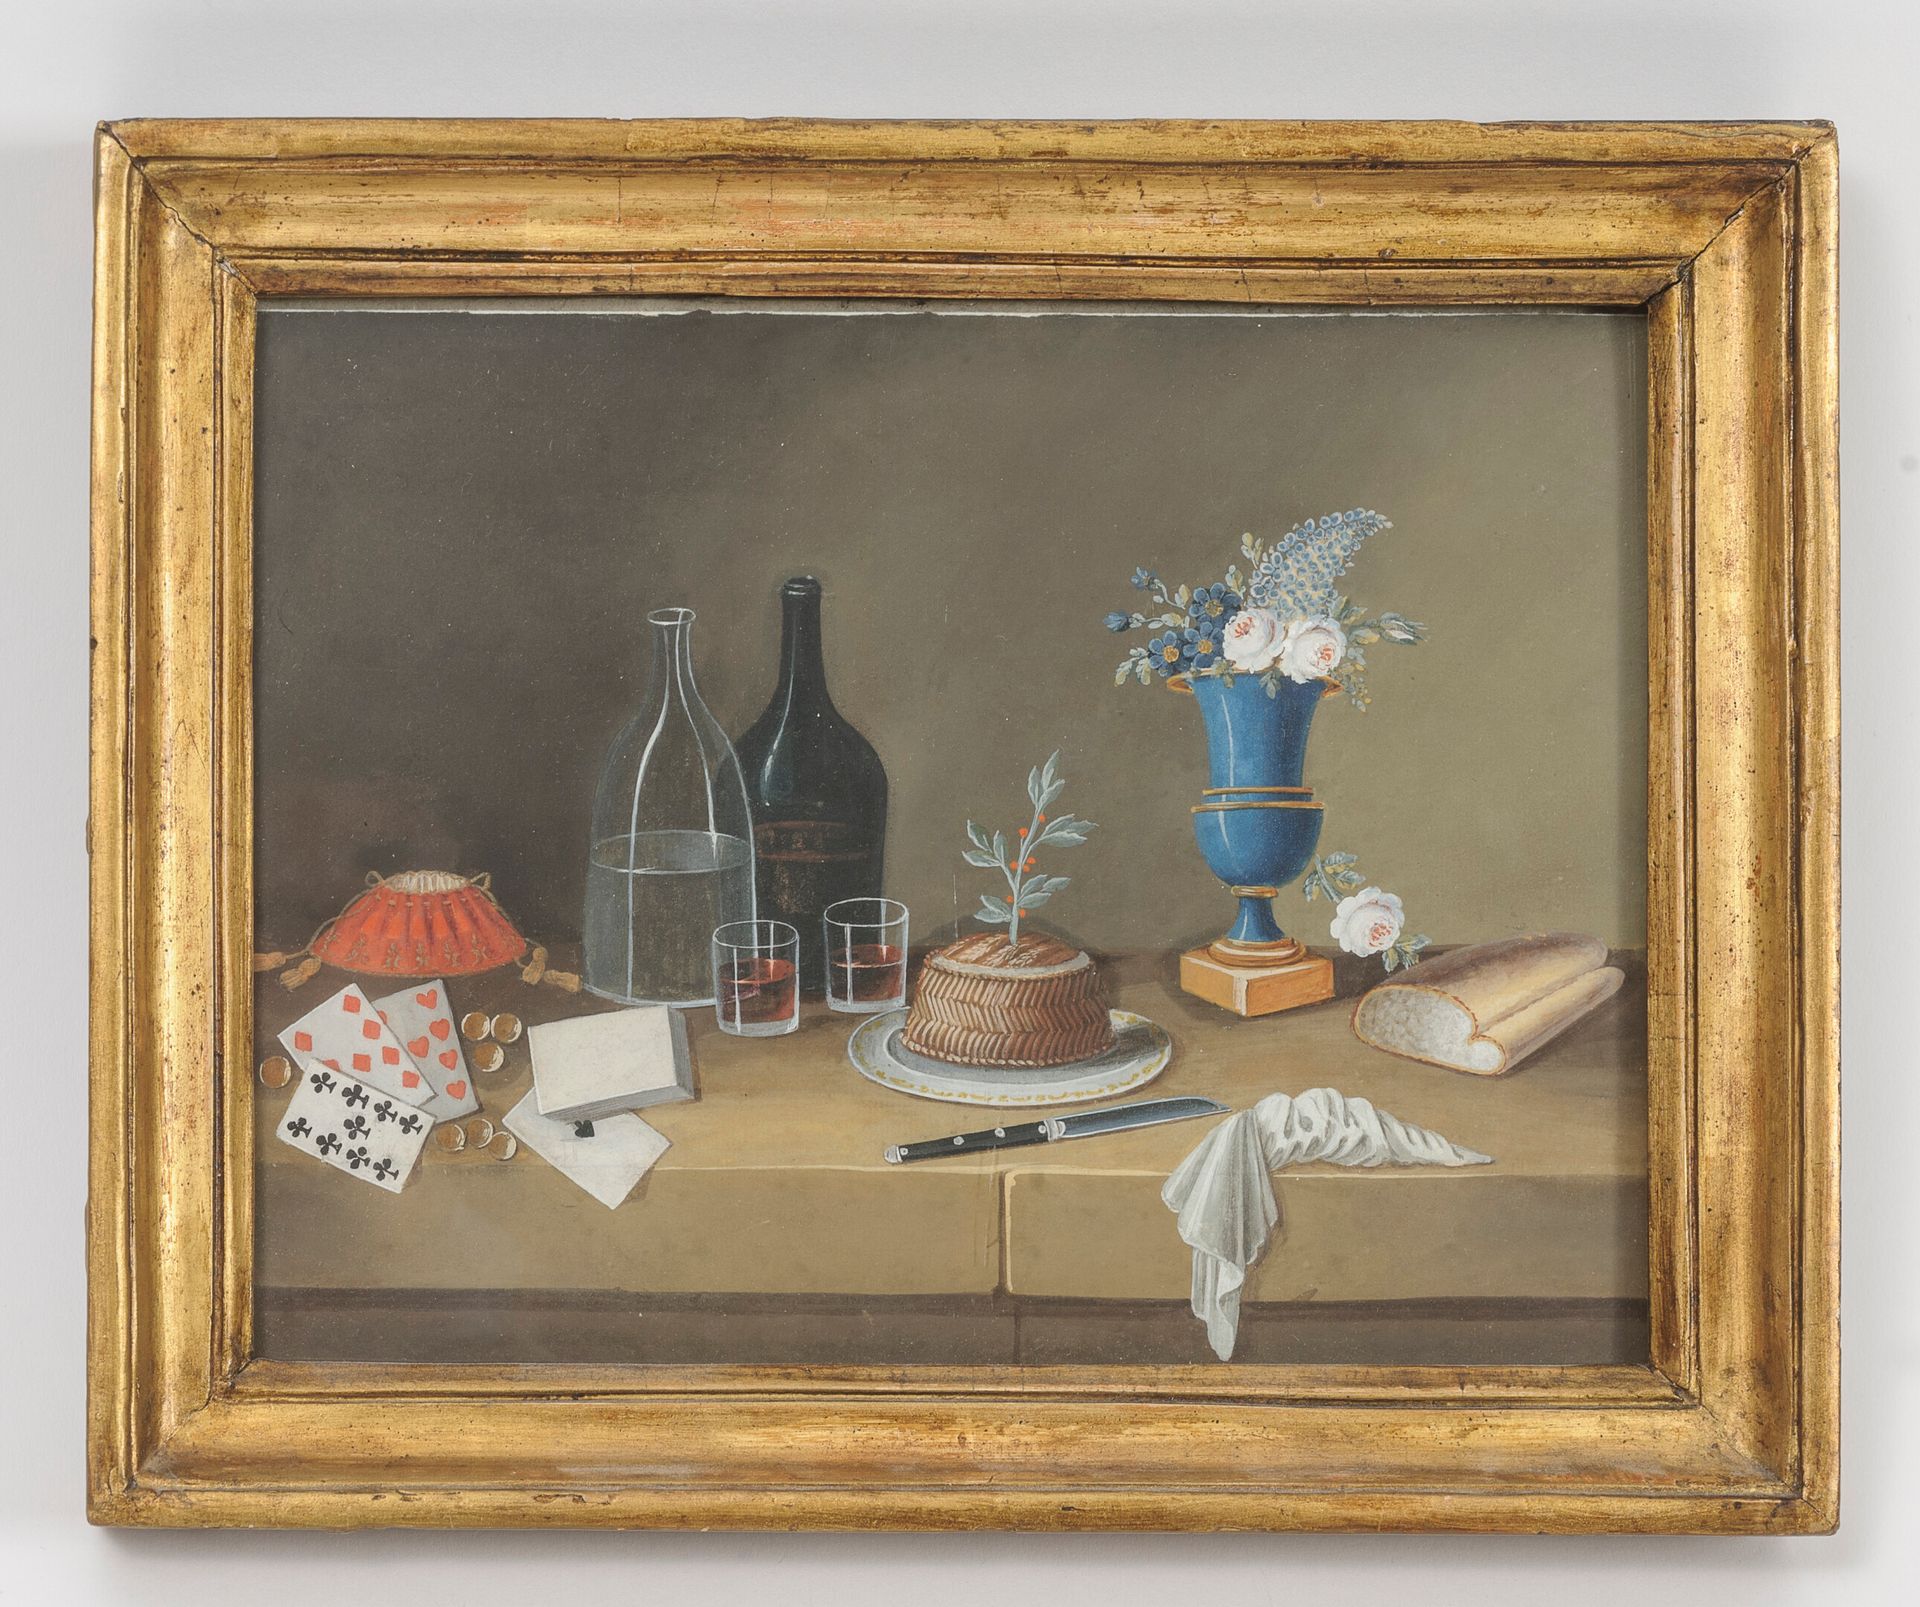 Johann RUDOLF FEYERABEND (1779-1814) dit LELONG 静物画，有扑克牌、玻璃杯和瓶子，烤肉和花束。

纸上水粉。

1&hellip;